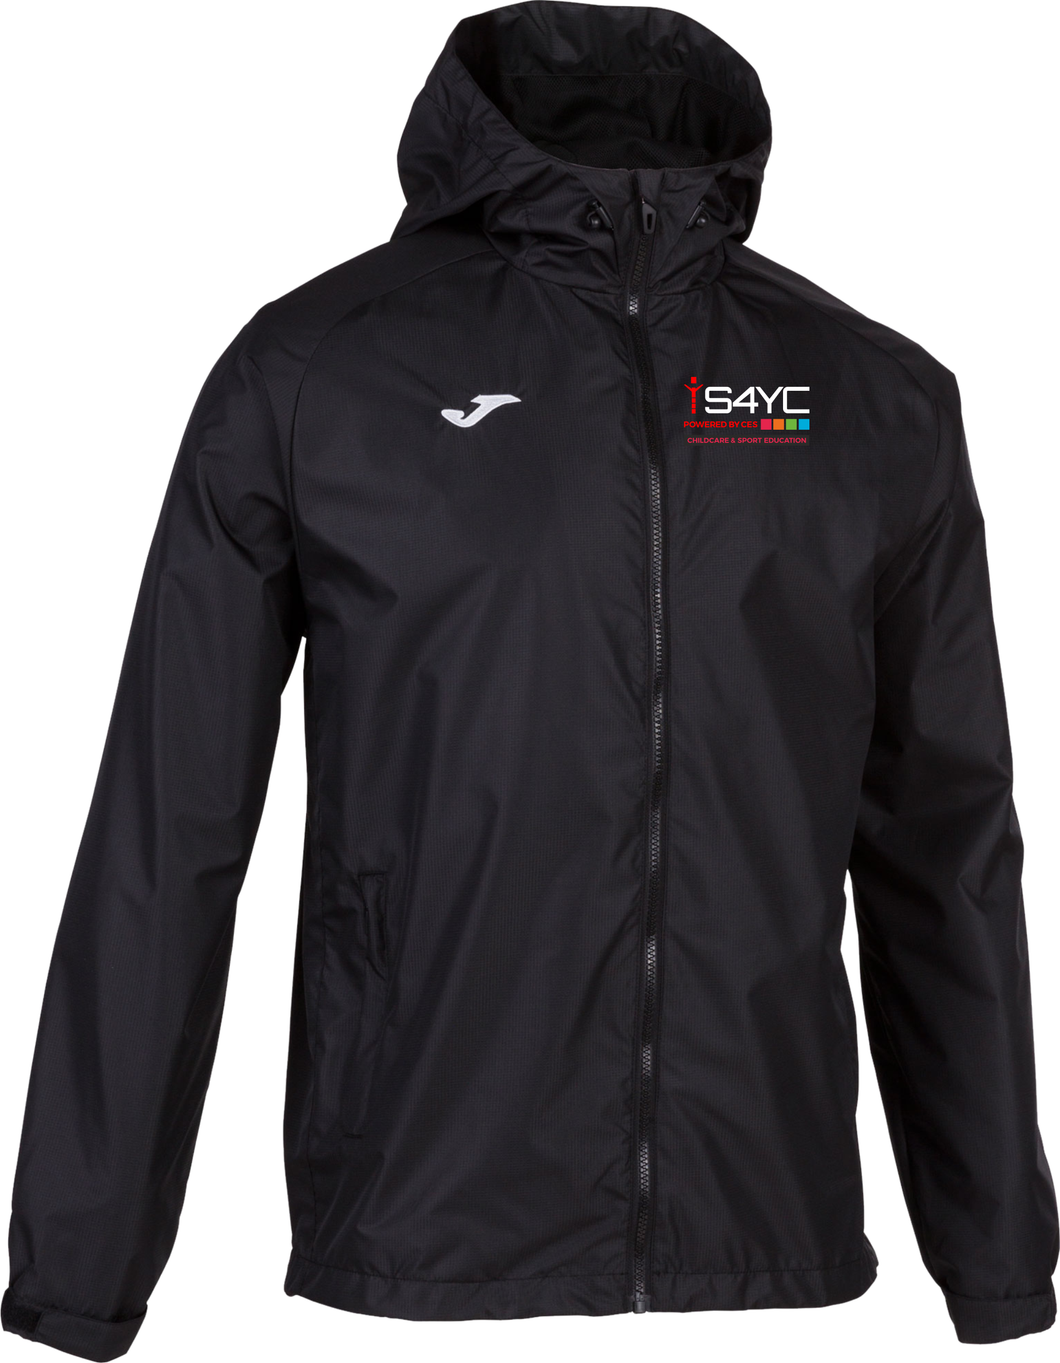 S4YC Unisex Sports Staff Rain Jacket